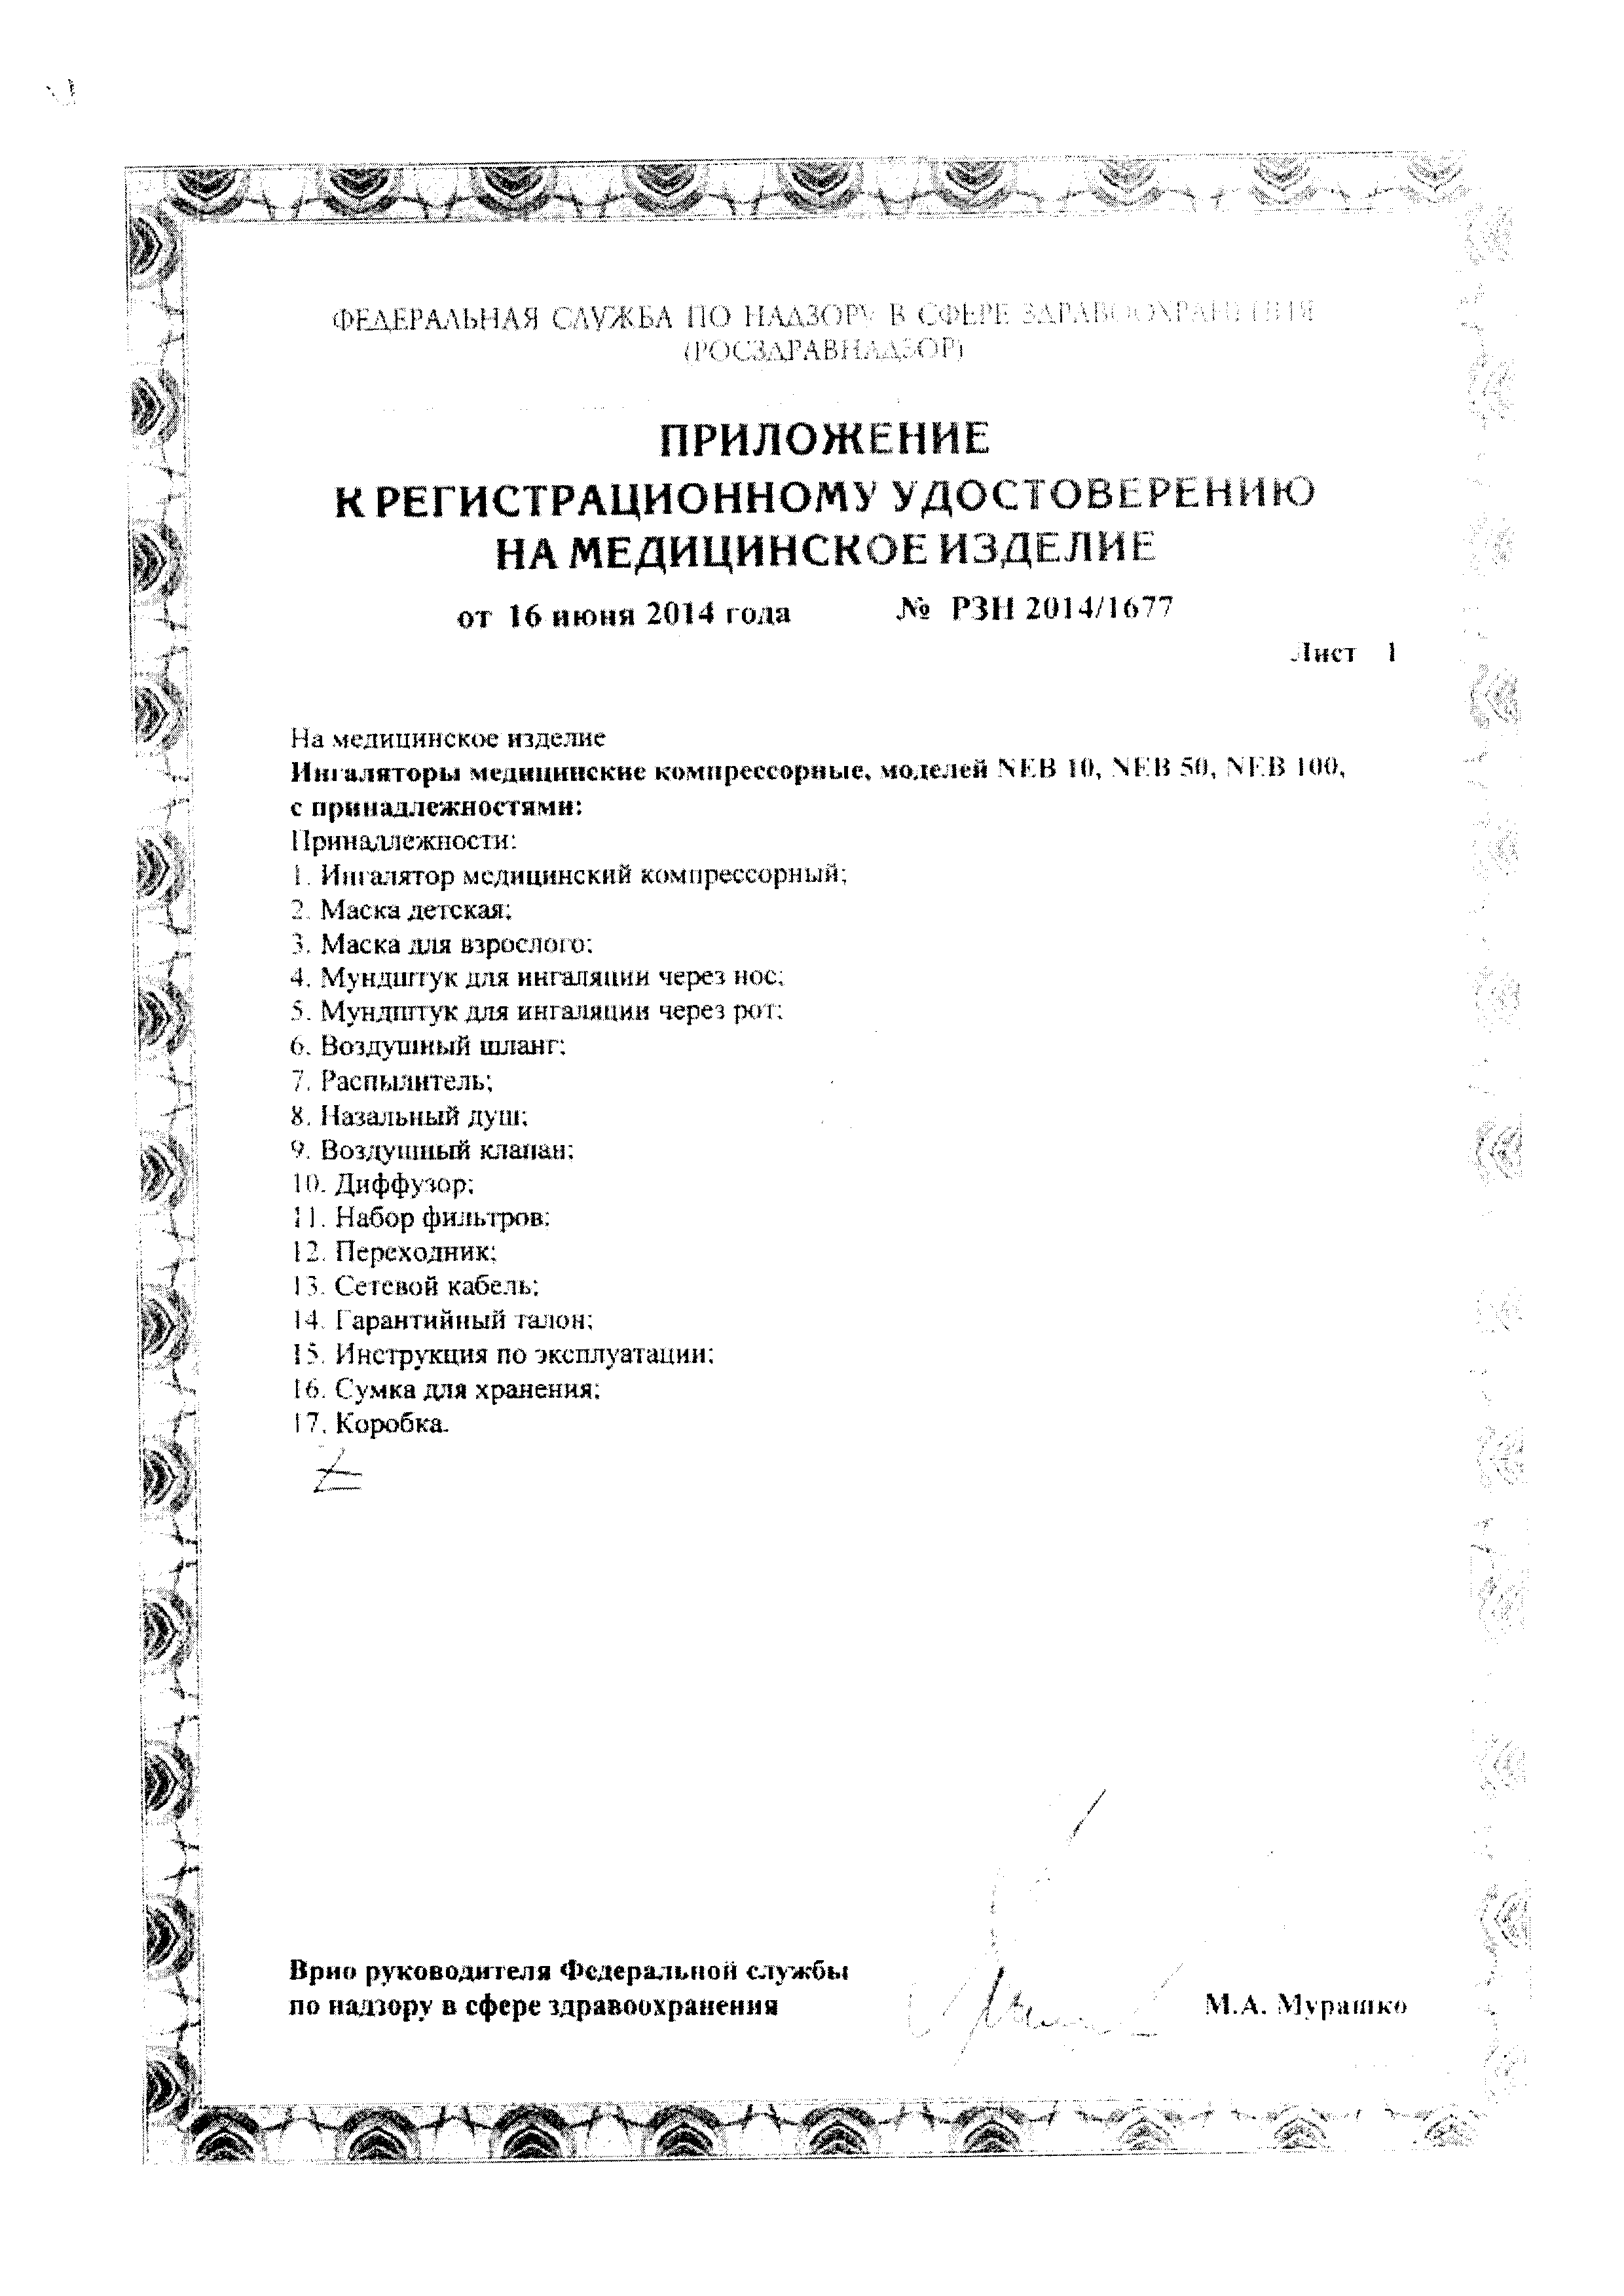 Ингалятор компрессорный Microlife NEB 100 сертификат